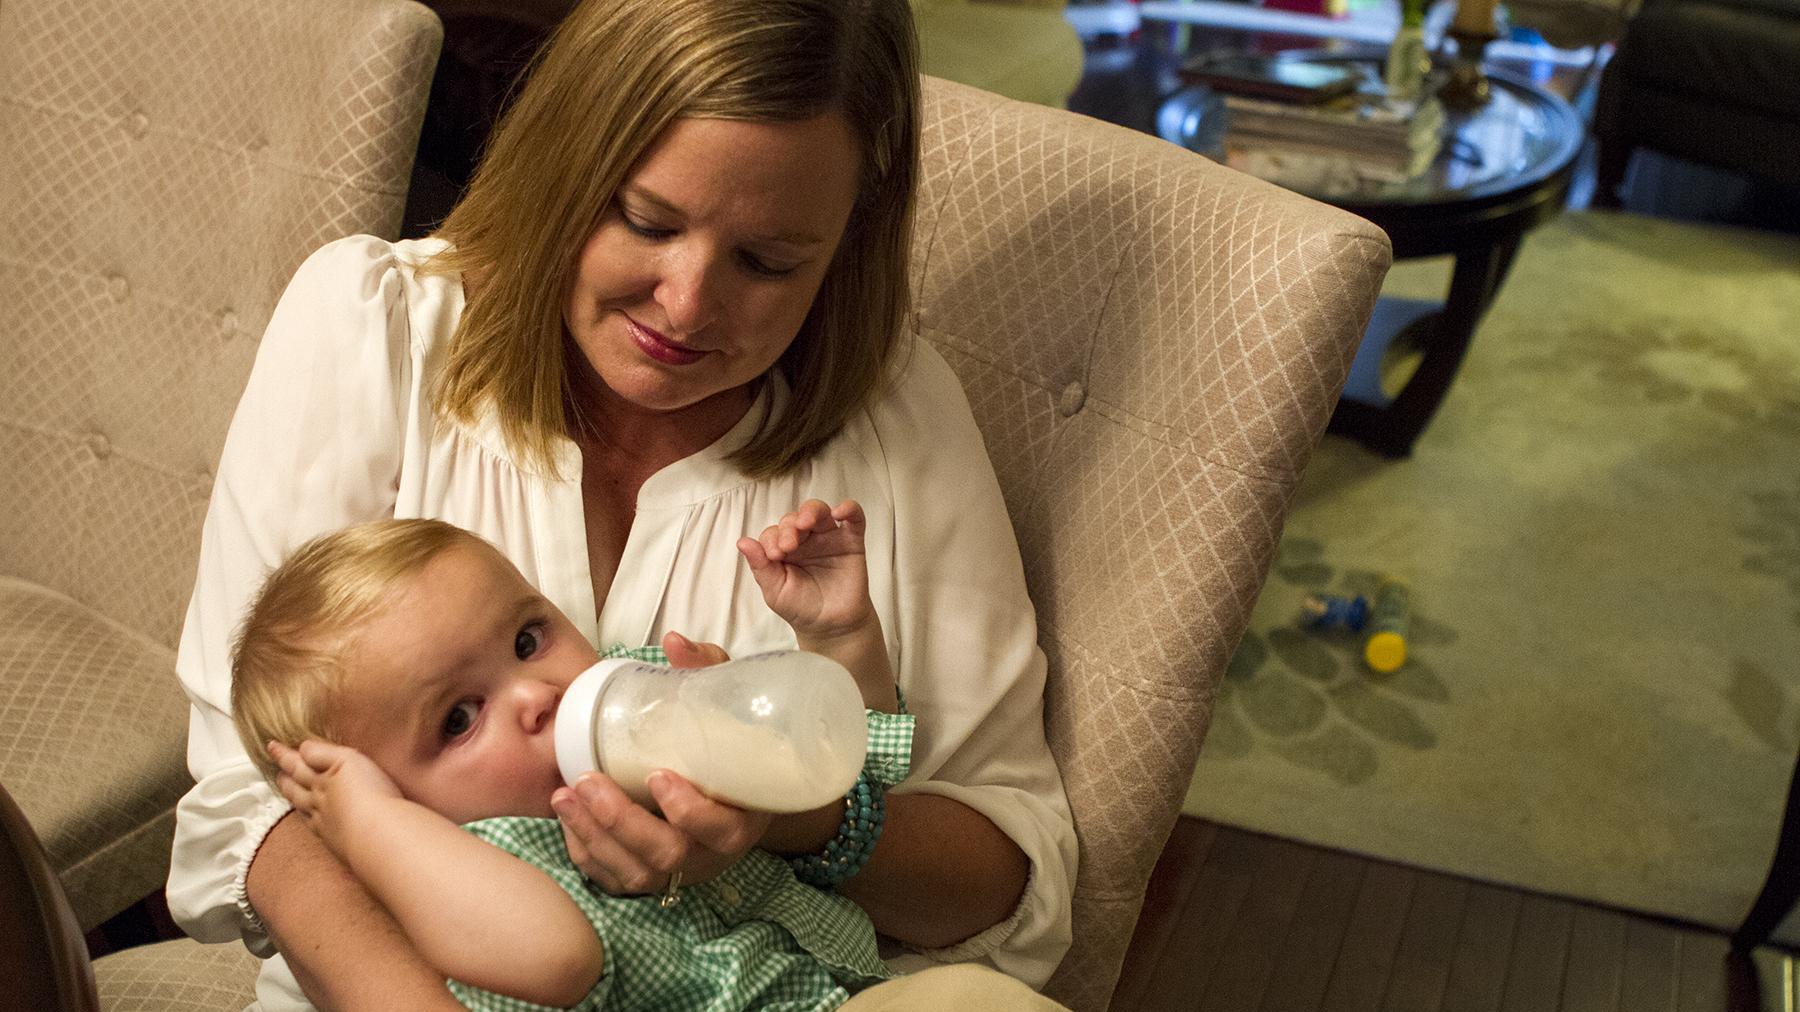 Stacie Chapman’s son was born healthy, despite the results of a prenatal screening.